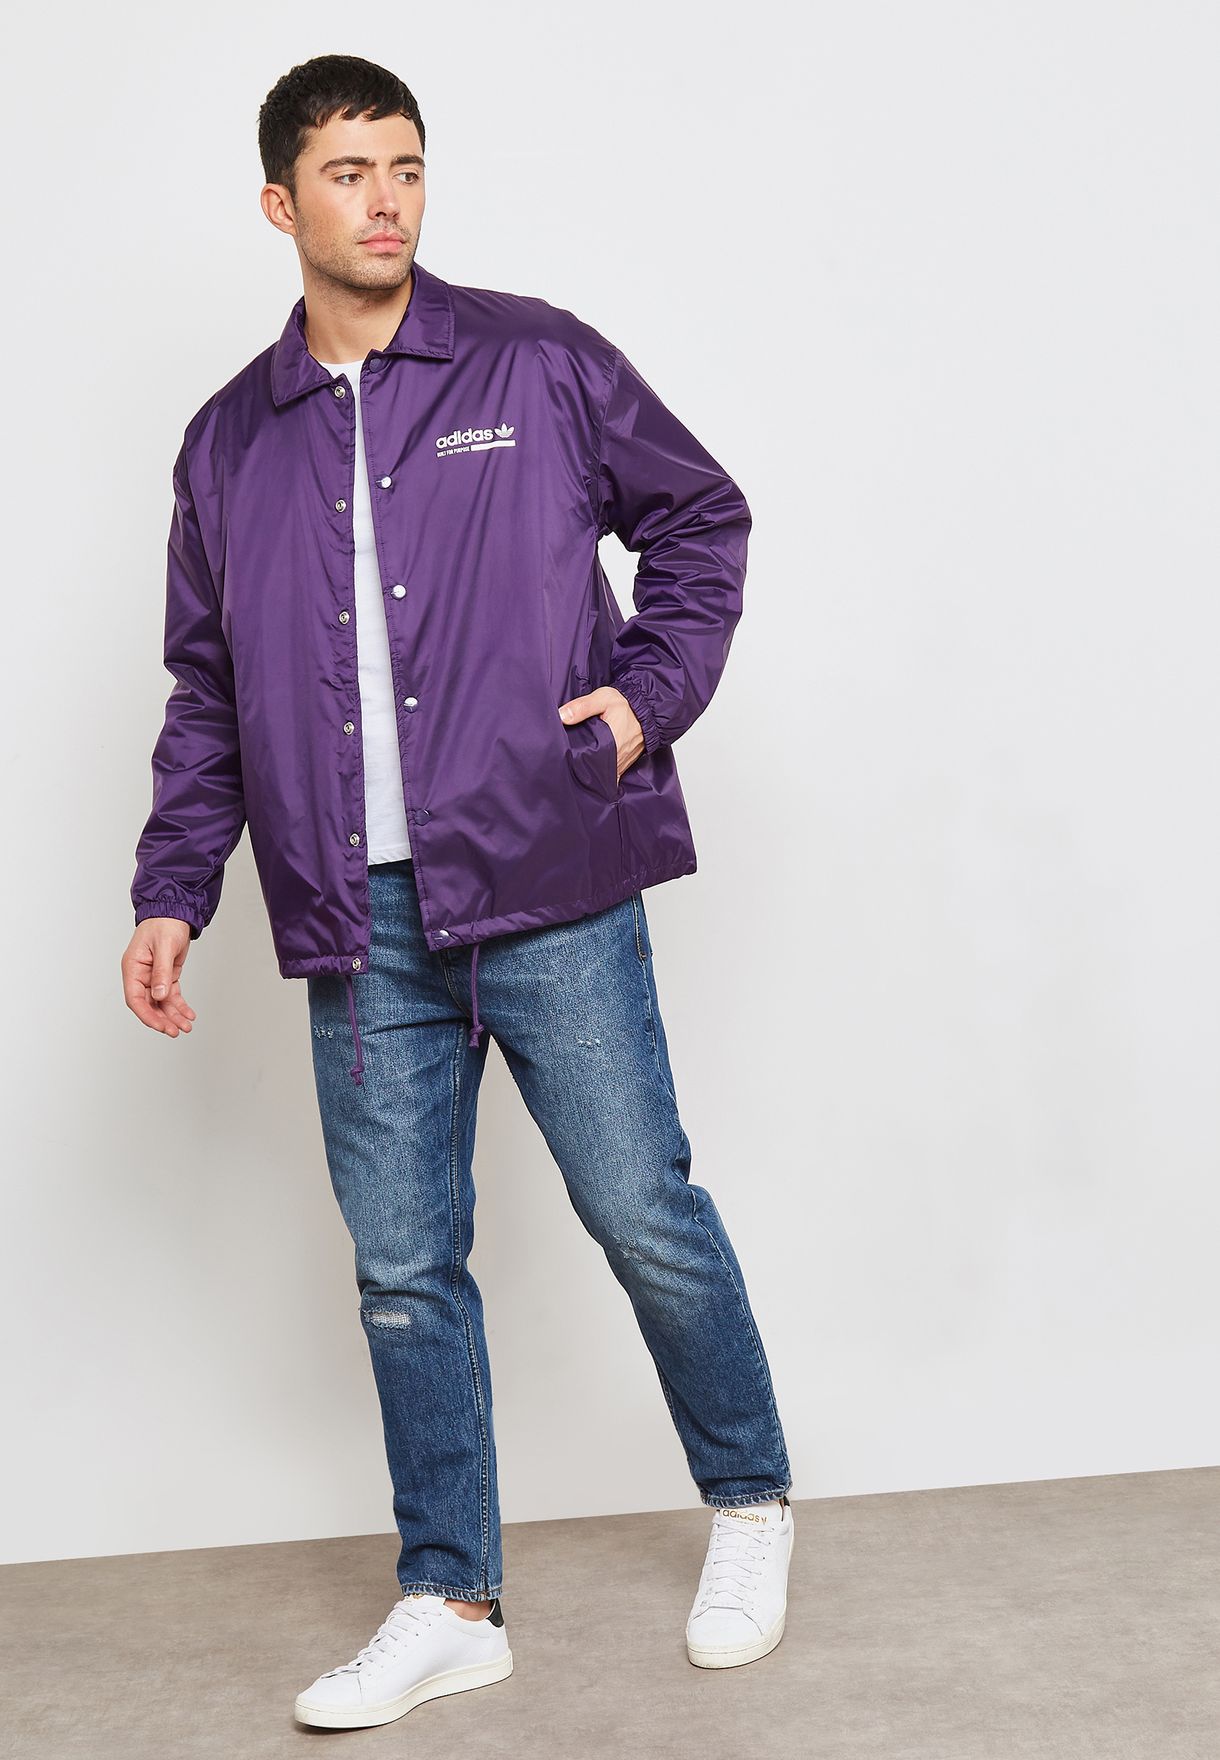 Buy adidas Originals purple Jacket Men in